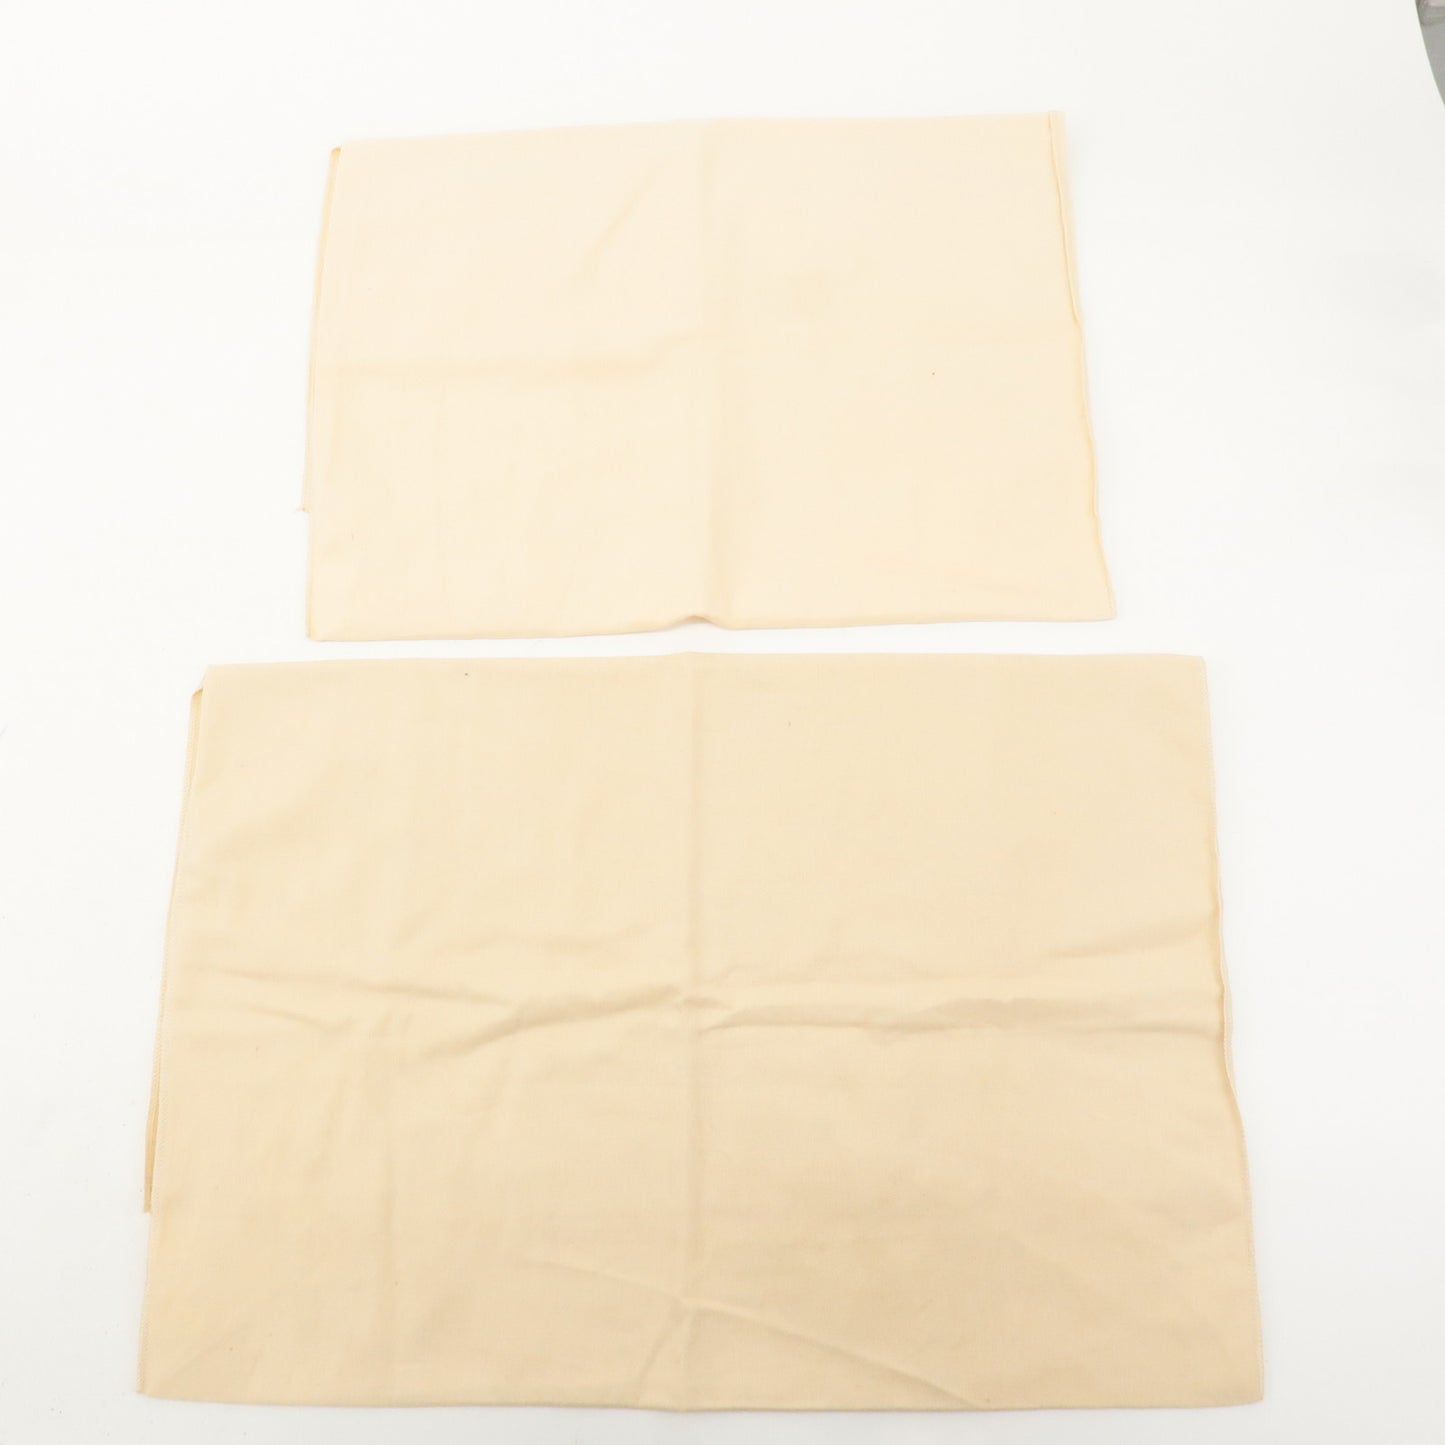 Louis Vuitton Set of 10 Dust Bag Storage Bag Flap Drawstring Beige